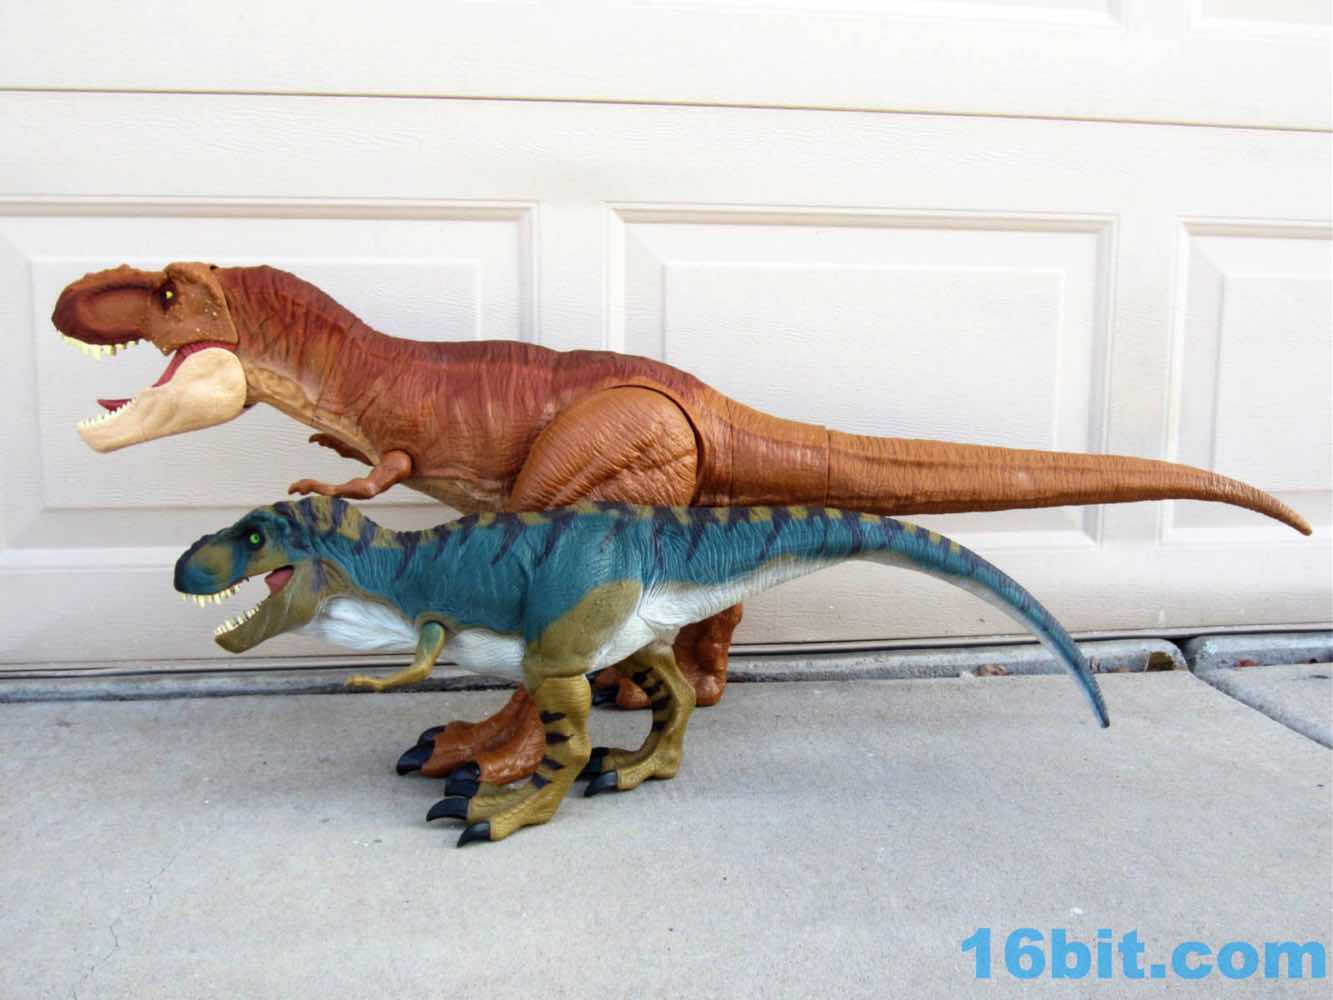  Mattel Jurassic World Super Colossal Tyrannosaurus Rex [  Exclusive] : Toys & Games